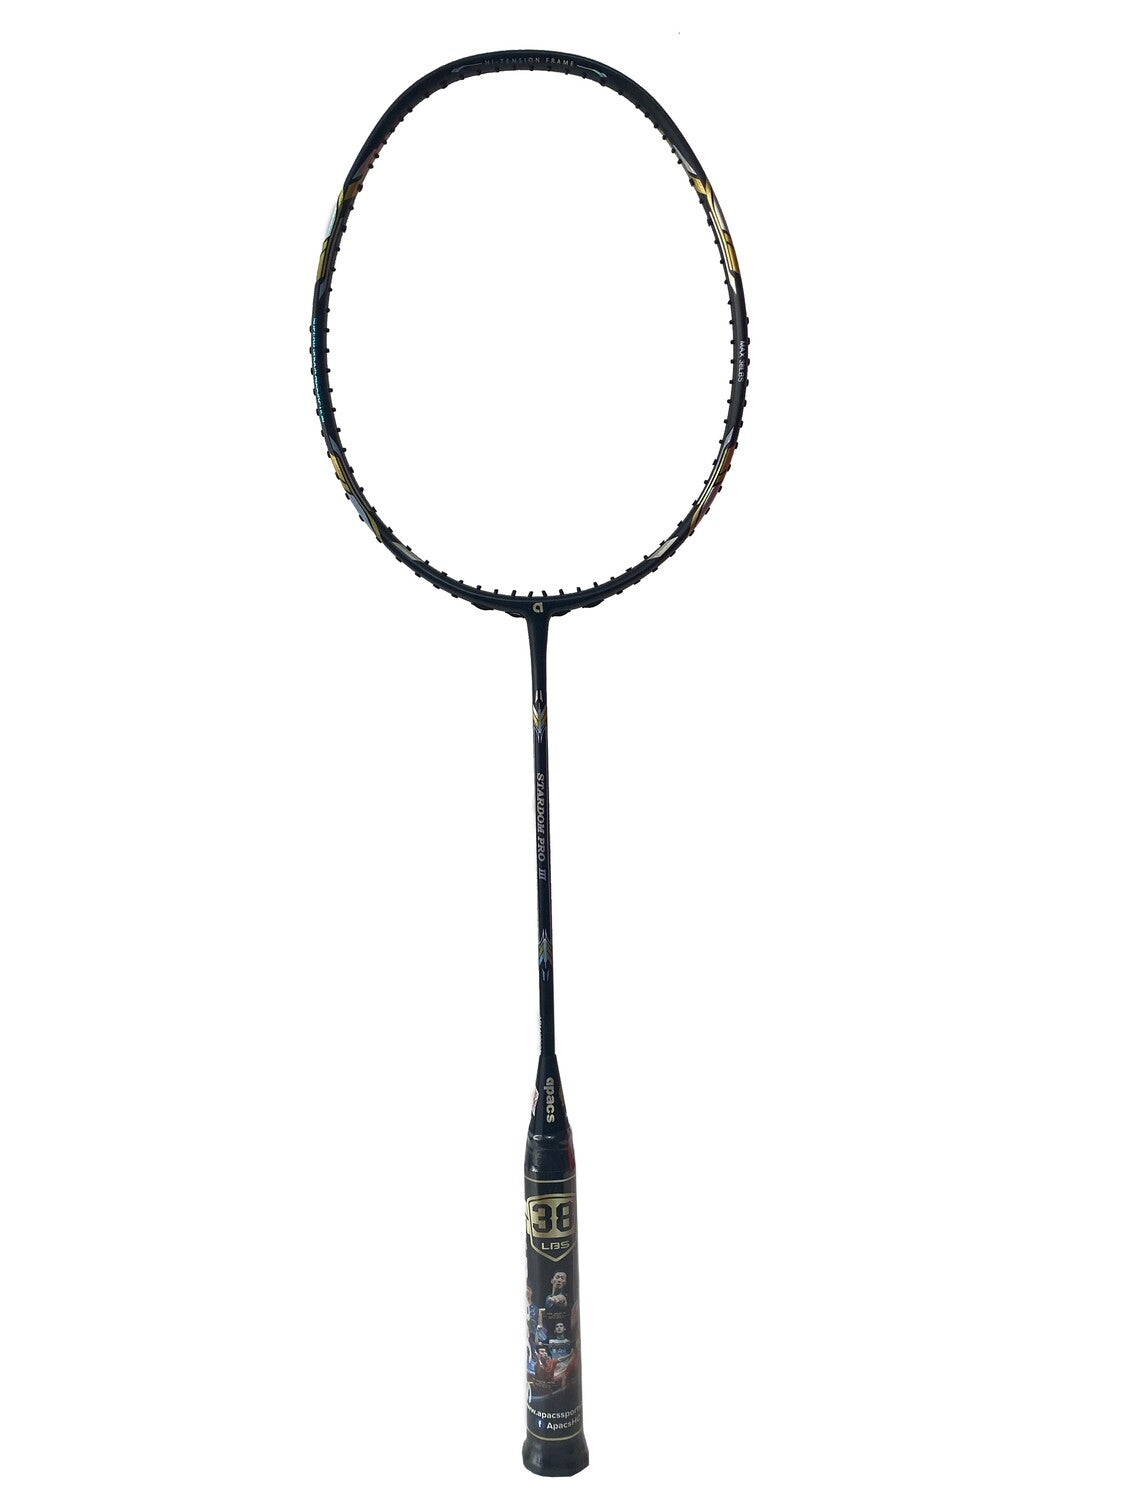 APACS N Force III Badminton Racket